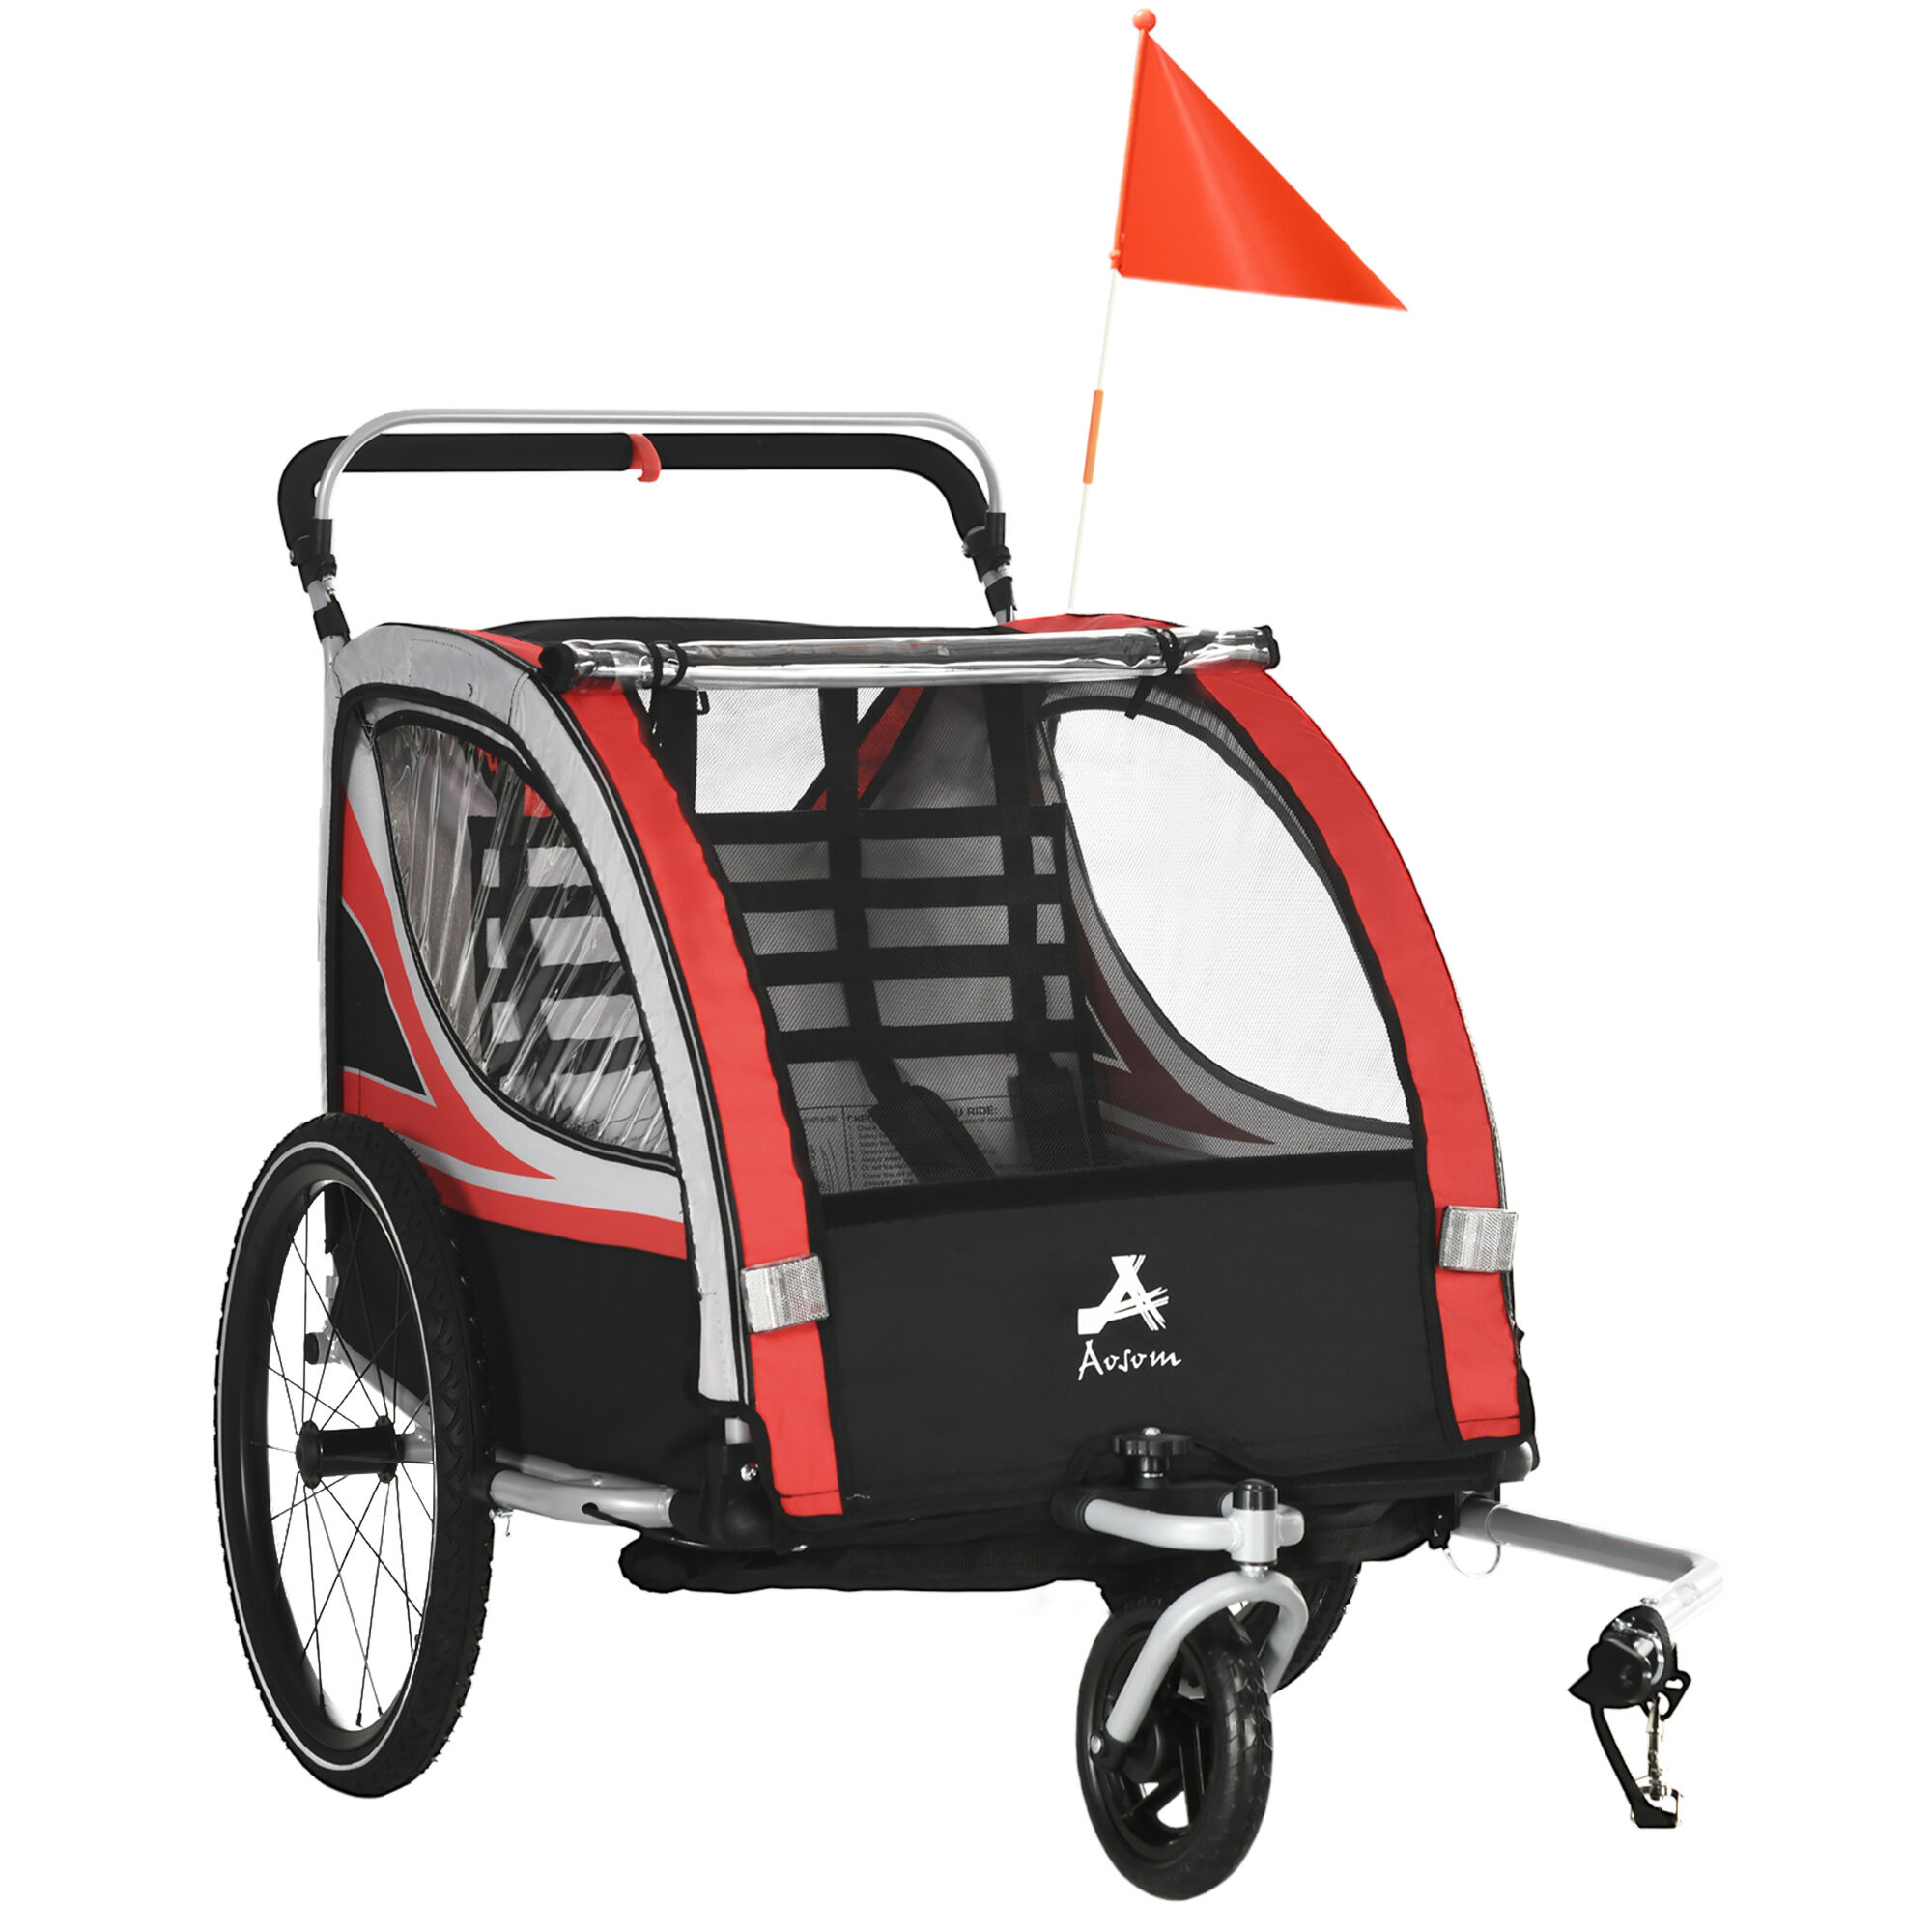 Aosom 2-in-1 Red Child Bike Trailer & Baby Stroller, Enhanced Safety Features, Brake, Flag, Reflectors, Storage   Aosom.com